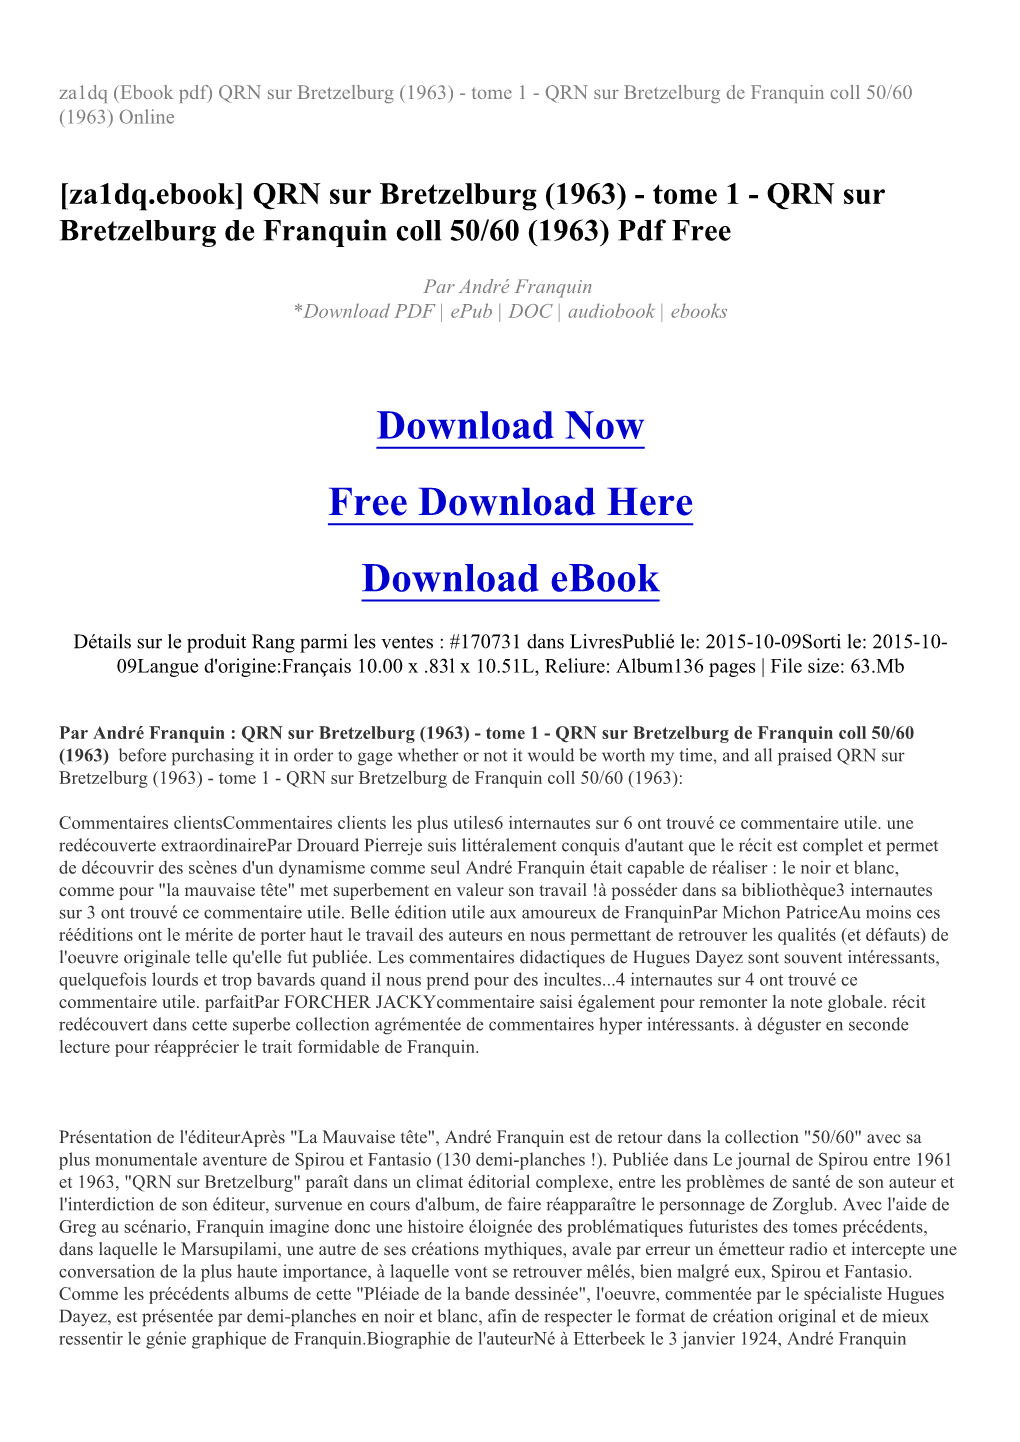 Za1dq (Ebook Pdf) QRN Sur Bretzelburg (1963) - Tome 1 - QRN Sur Bretzelburg De Franquin Coll 50/60 (1963) Online